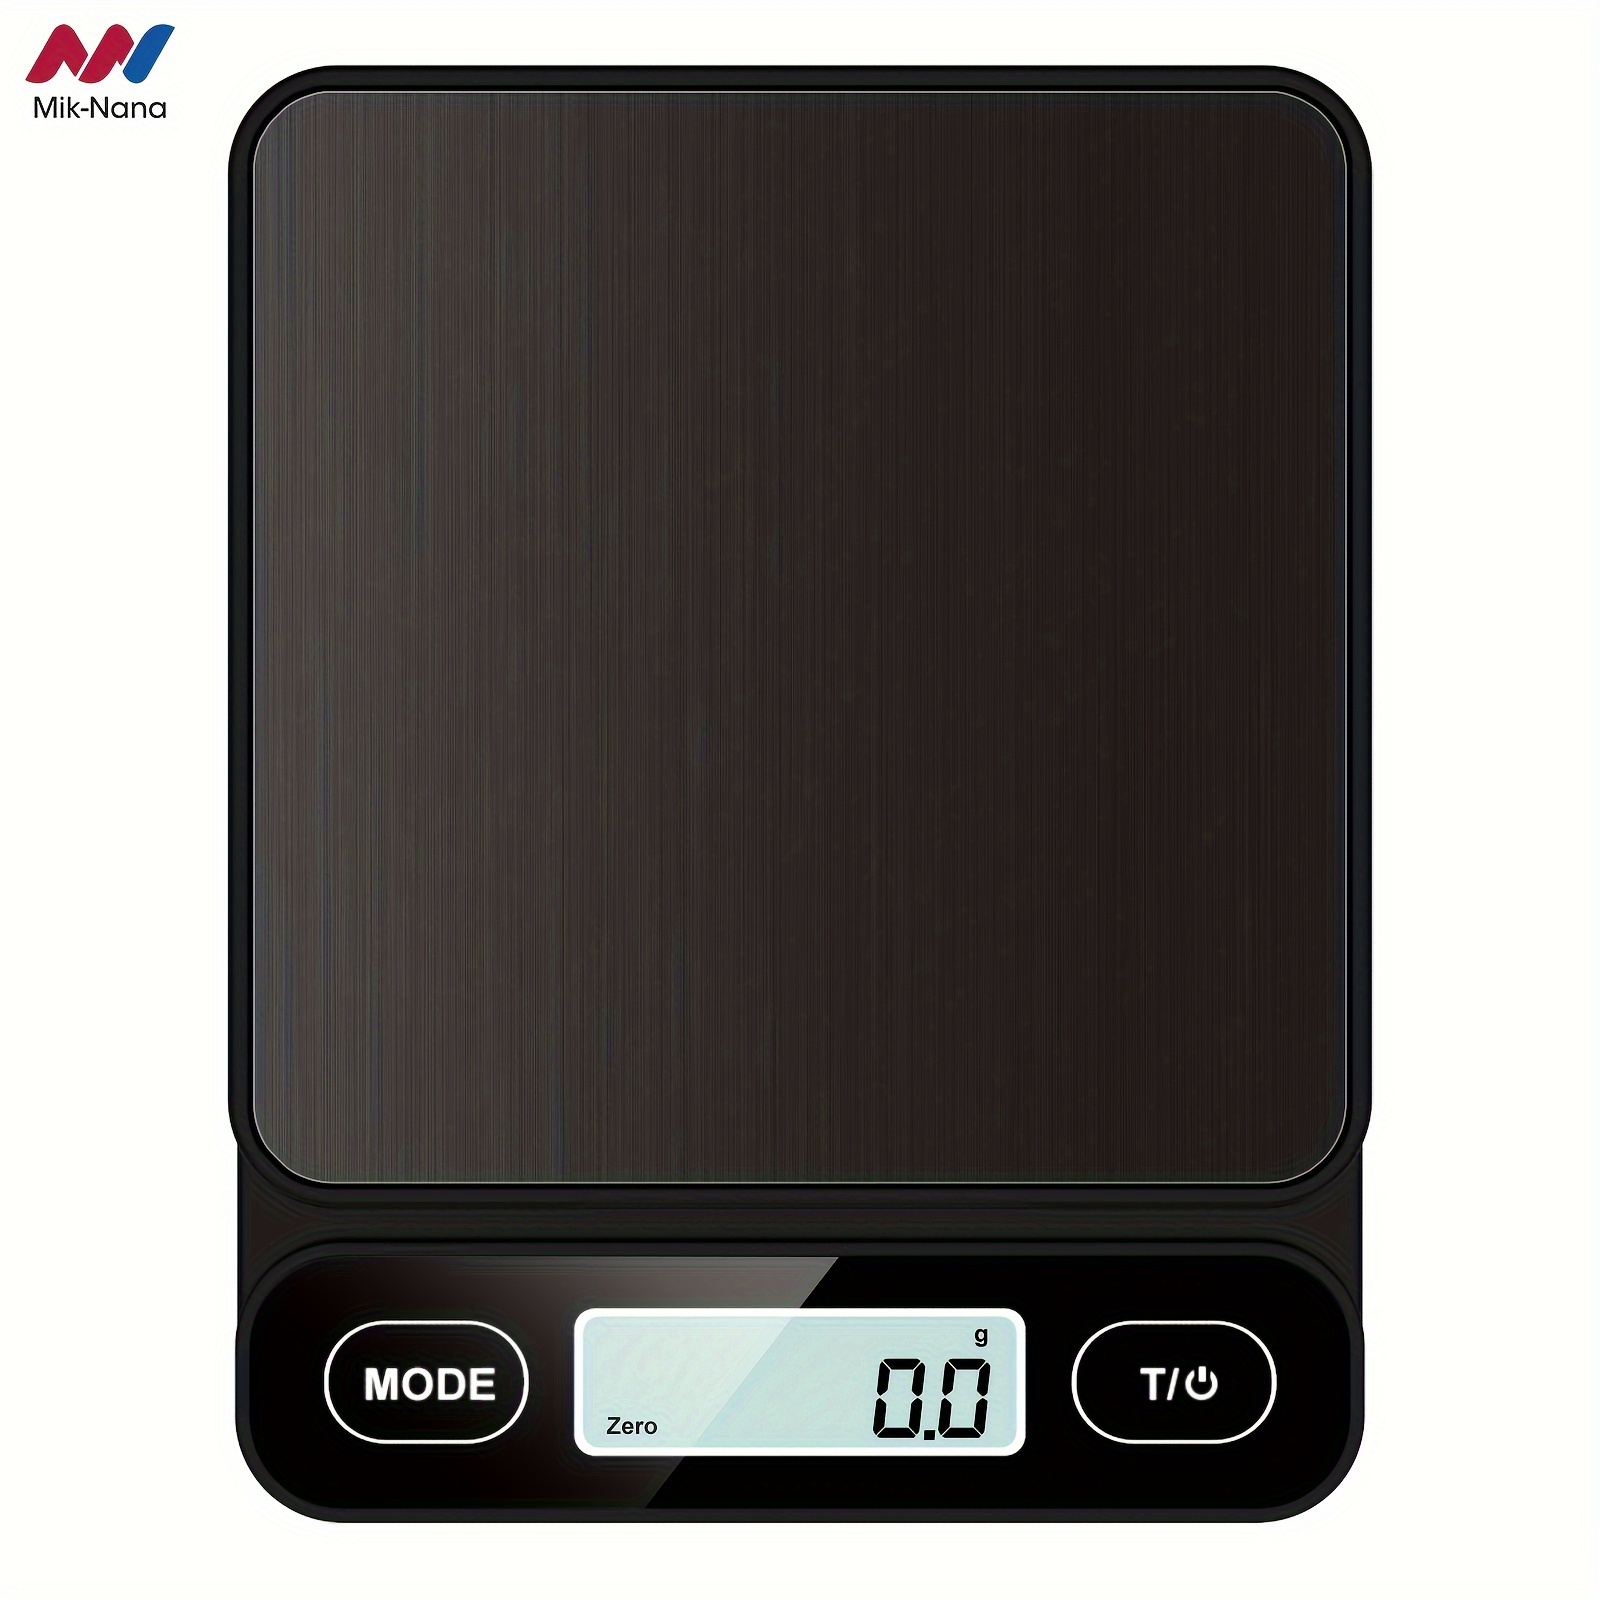 1pc Digital Pocket Scale, Digital Kitchen Scale, Weigh Gram Scale